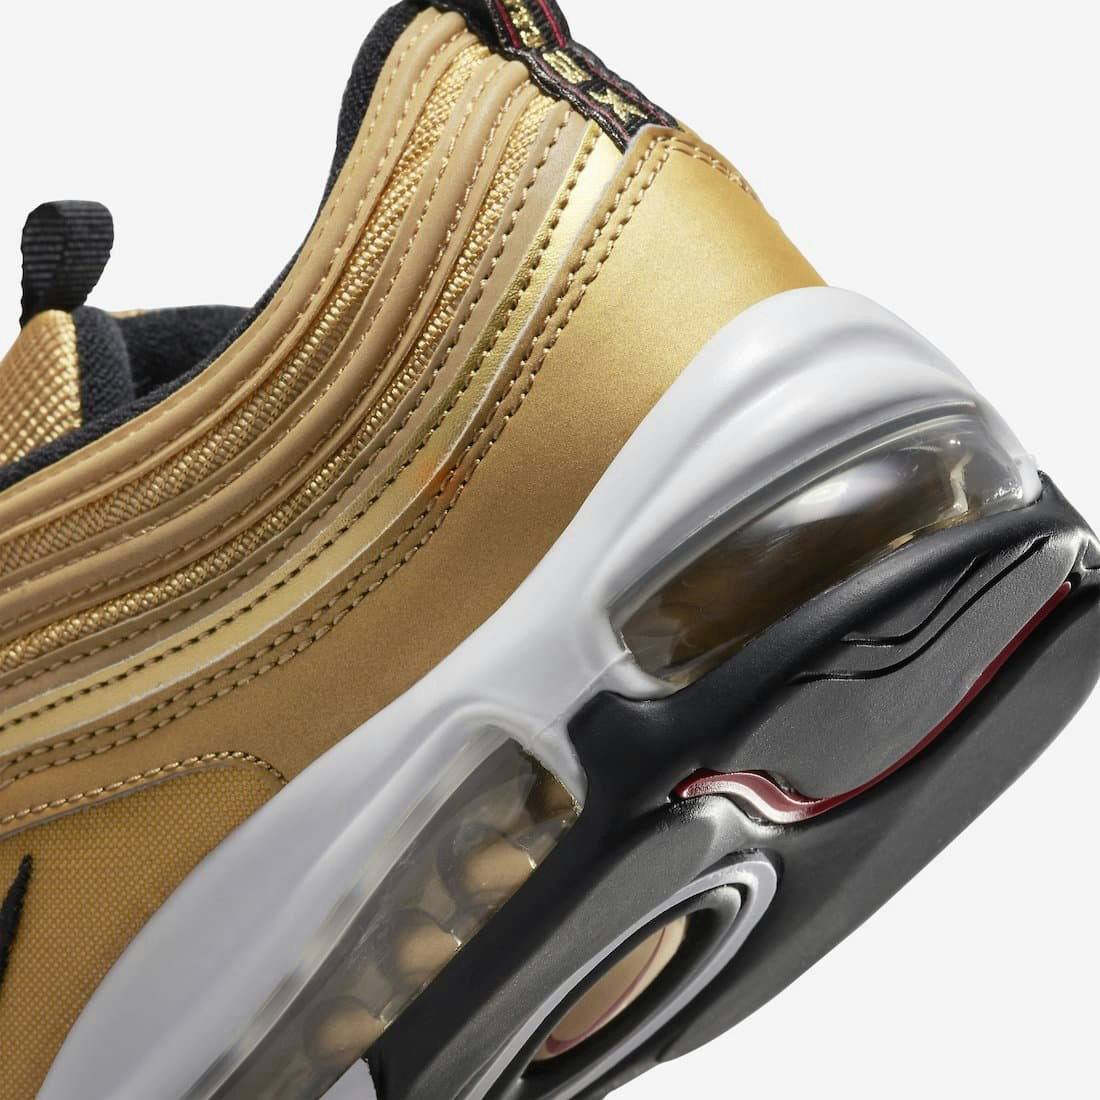 Nike Air Max 97 "Gold Bullet"